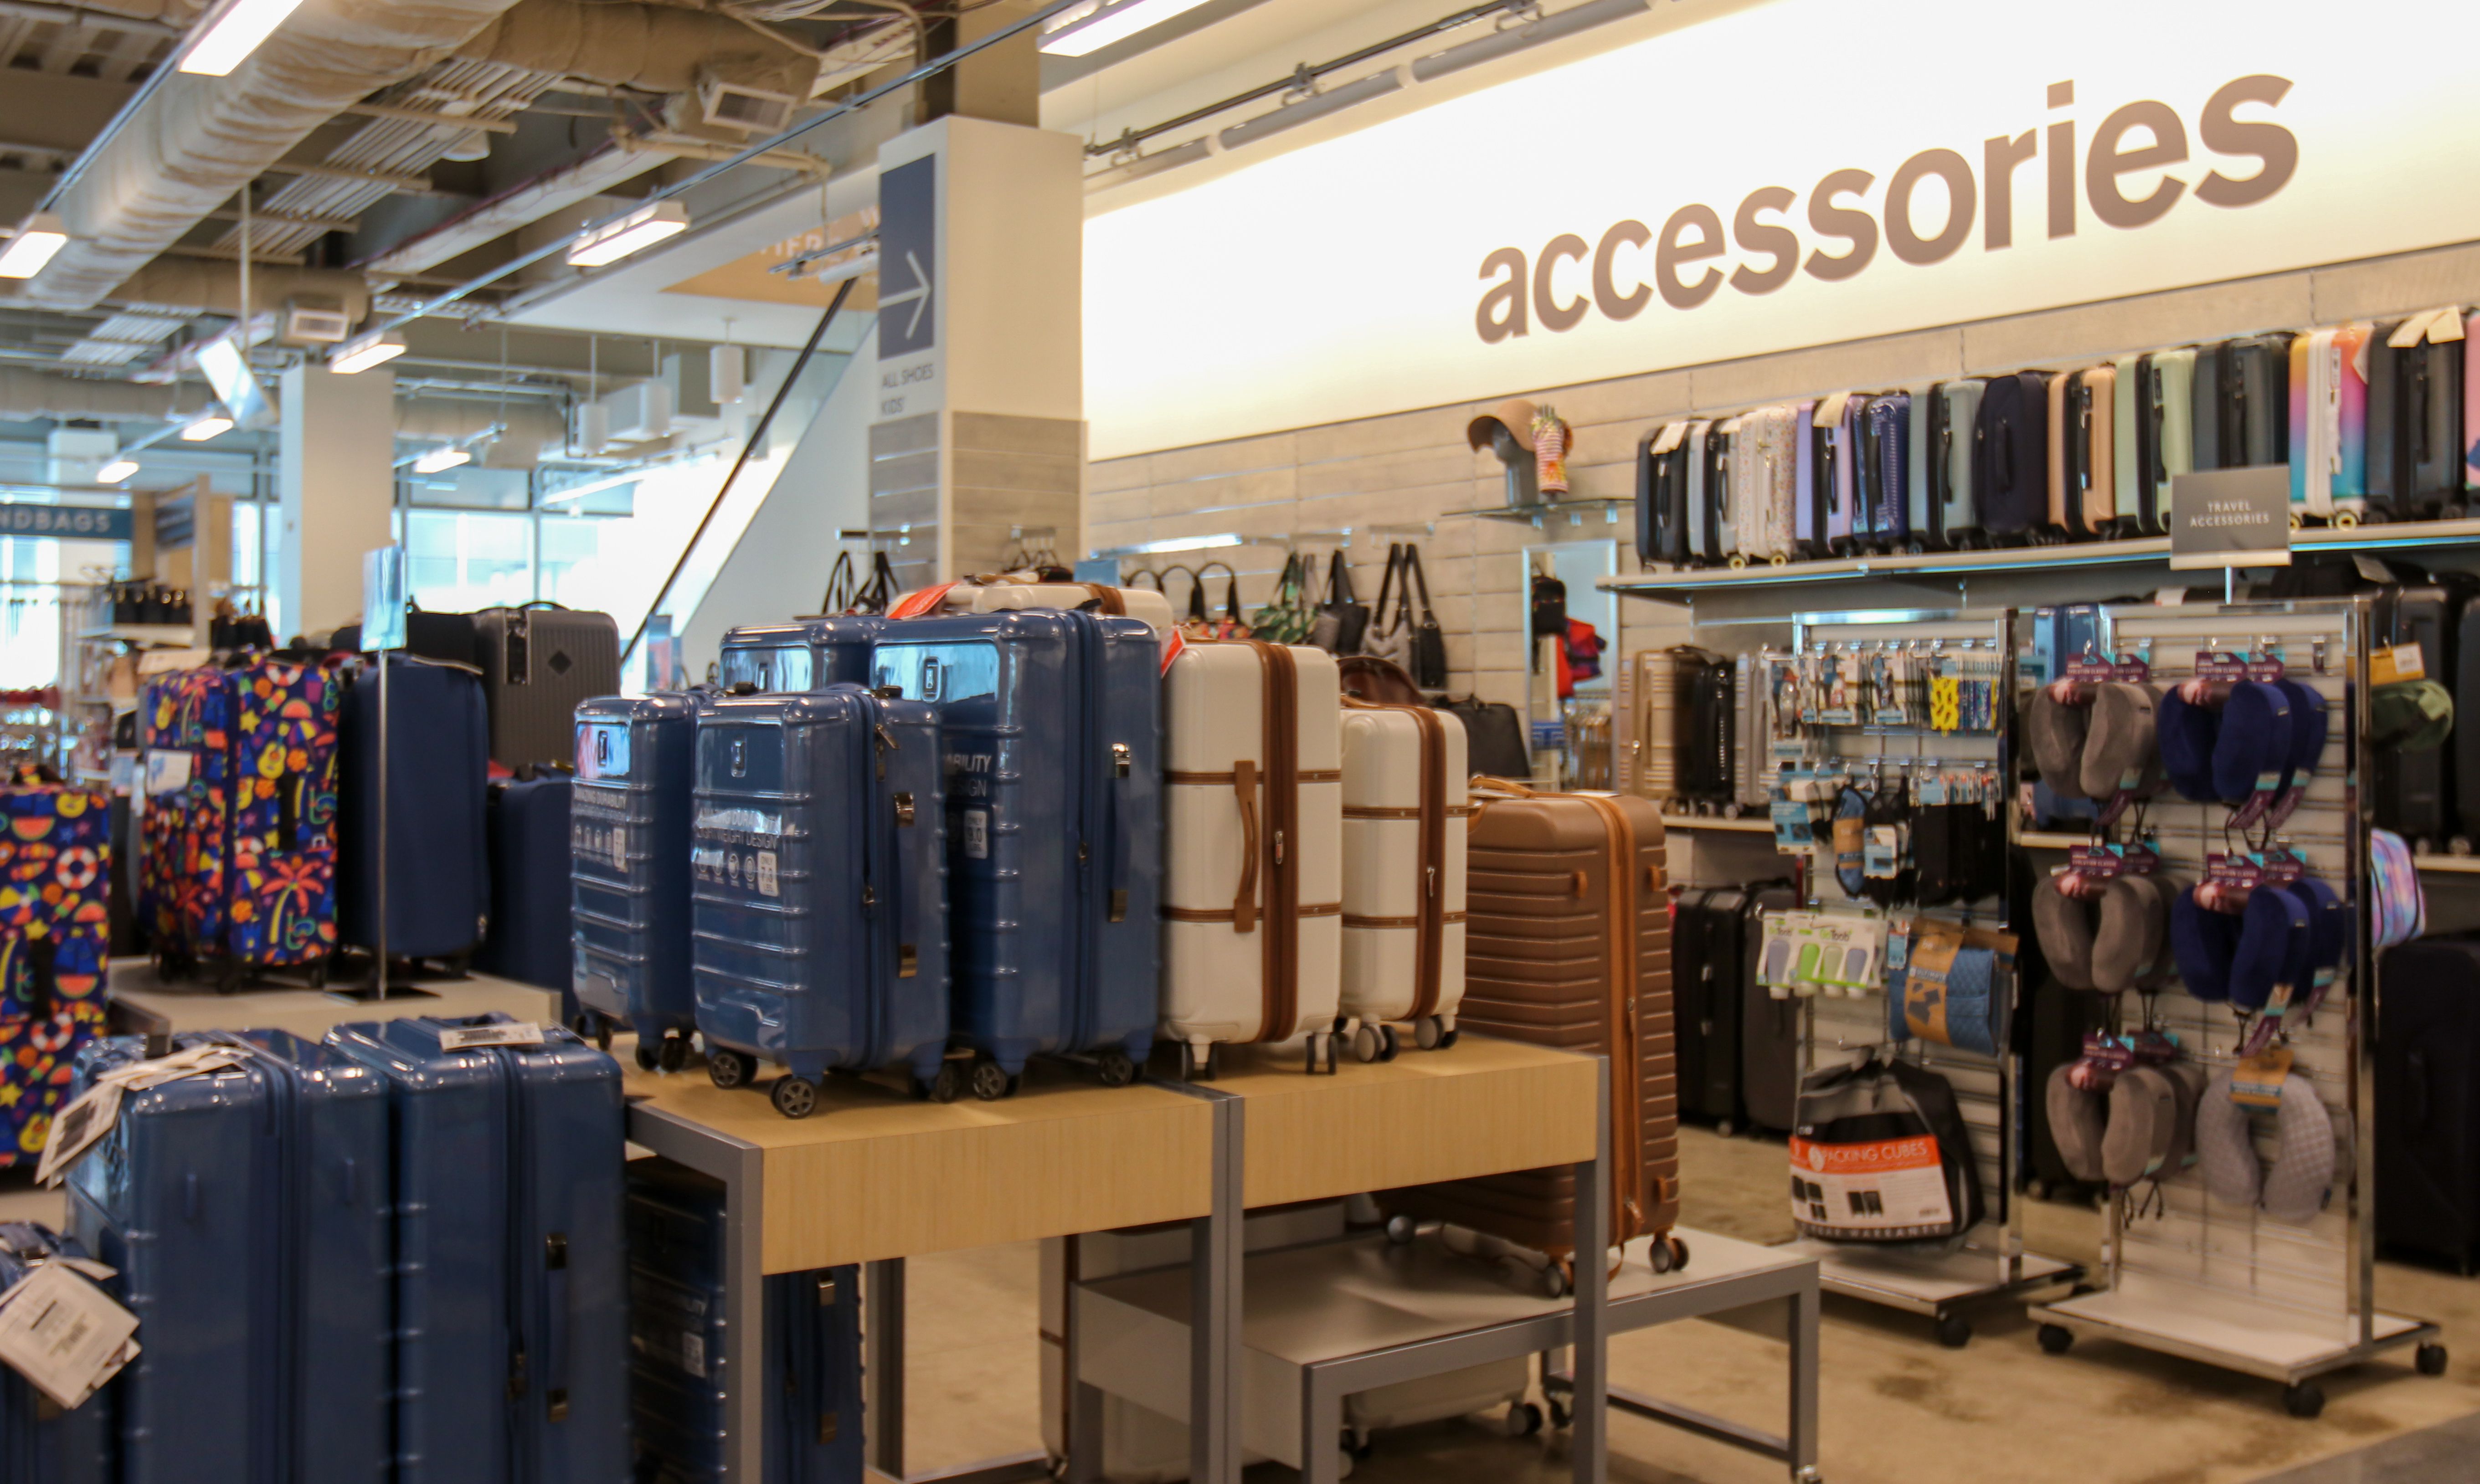 Nordstrom Rack opens in SLO. Get a peek inside the new store